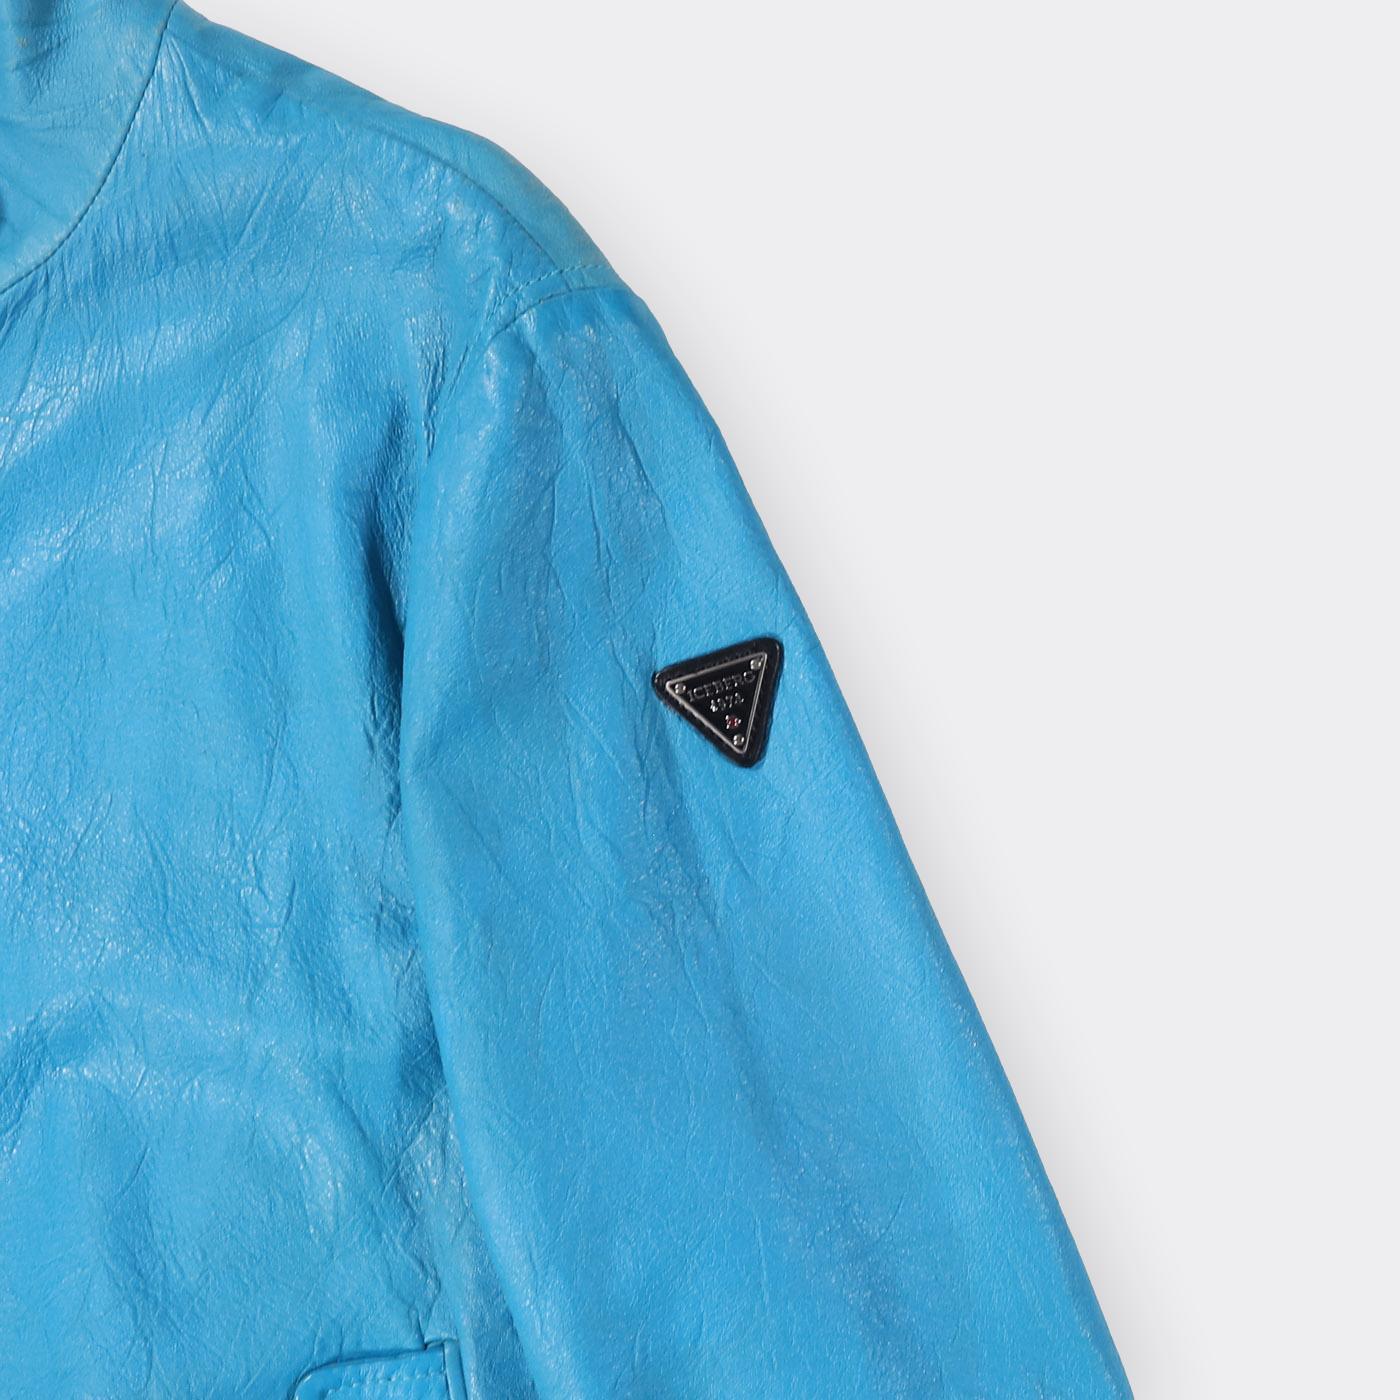 Iceberg Vintage Leather Jacket - Small - Known Source